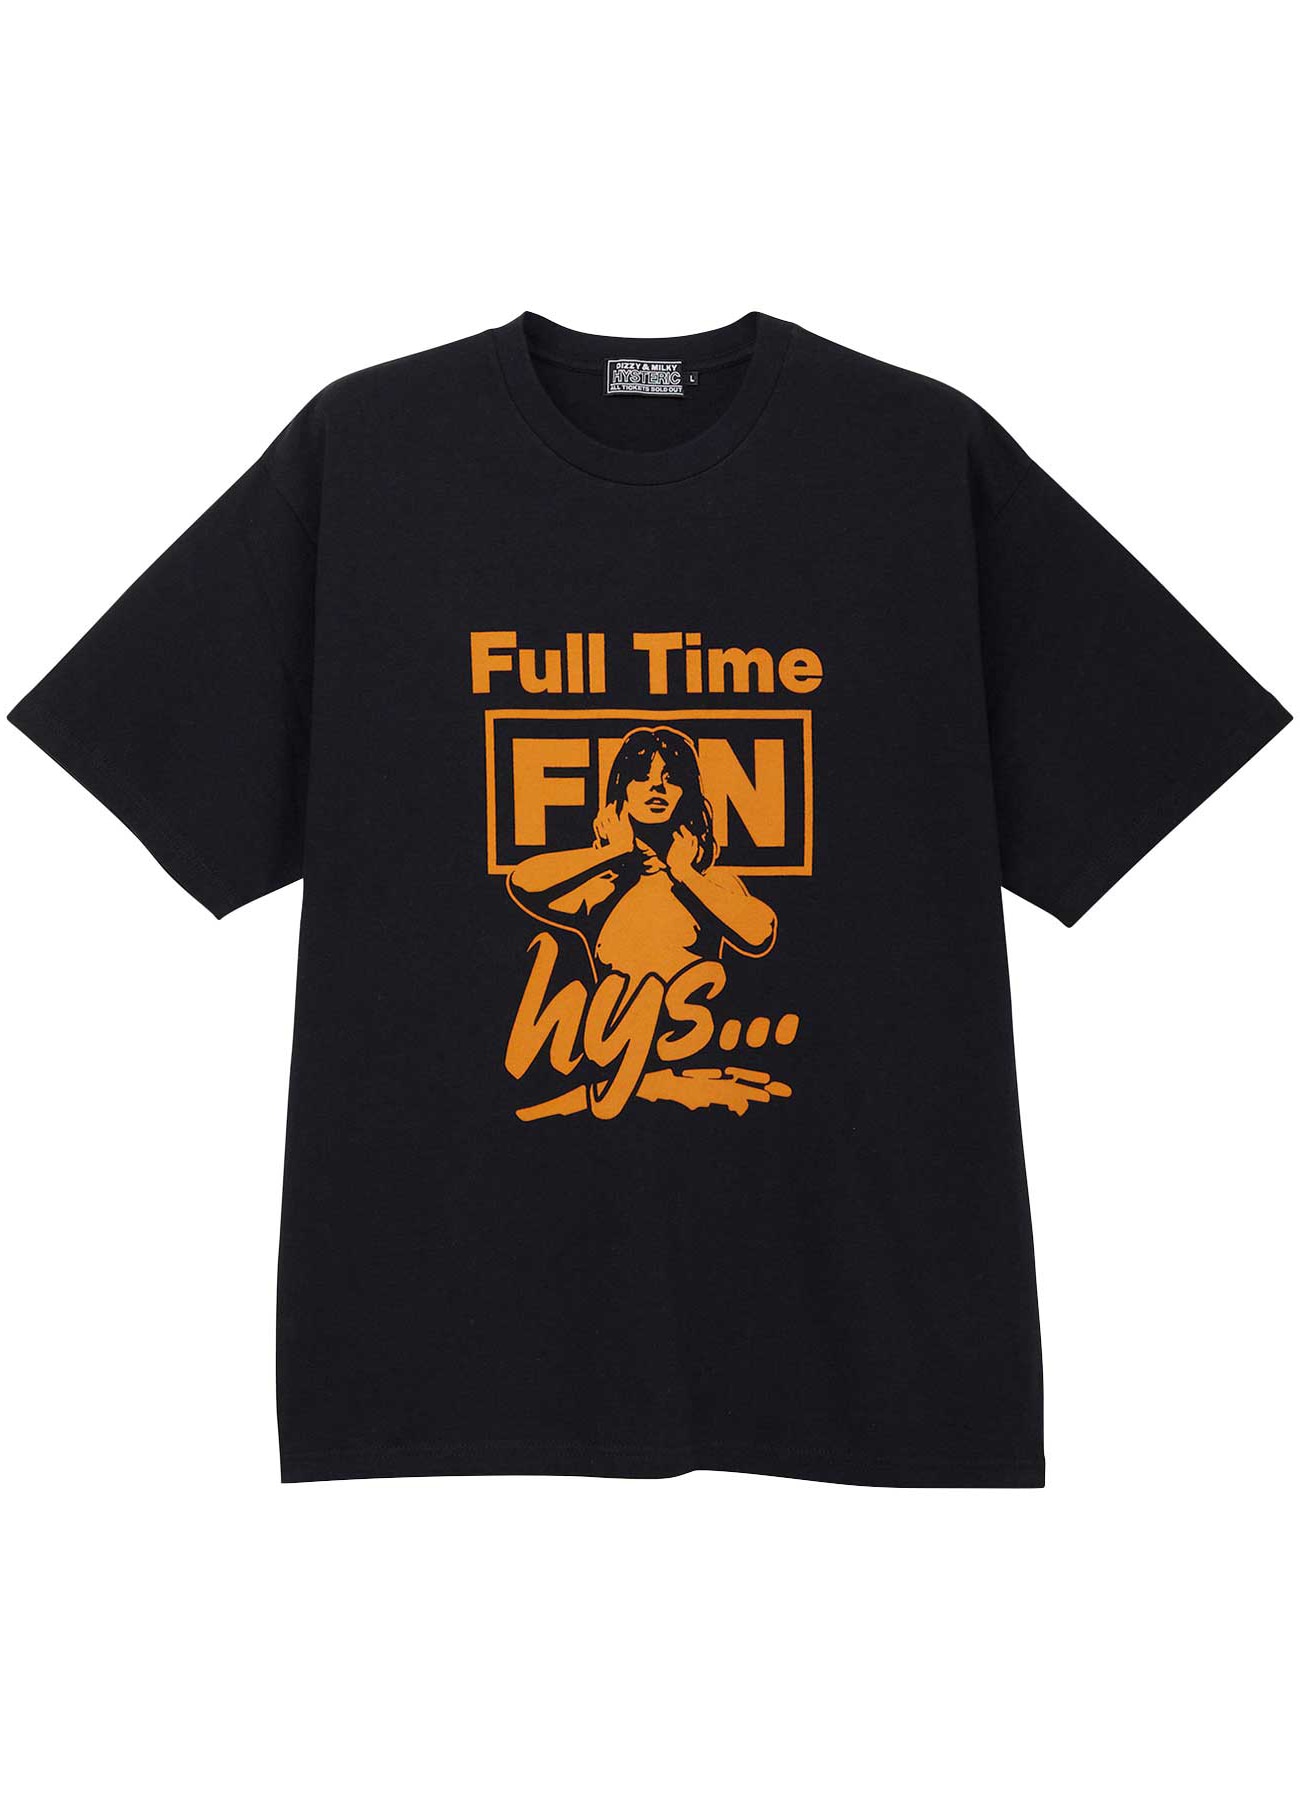 FULL TIME FUN T-Shirt